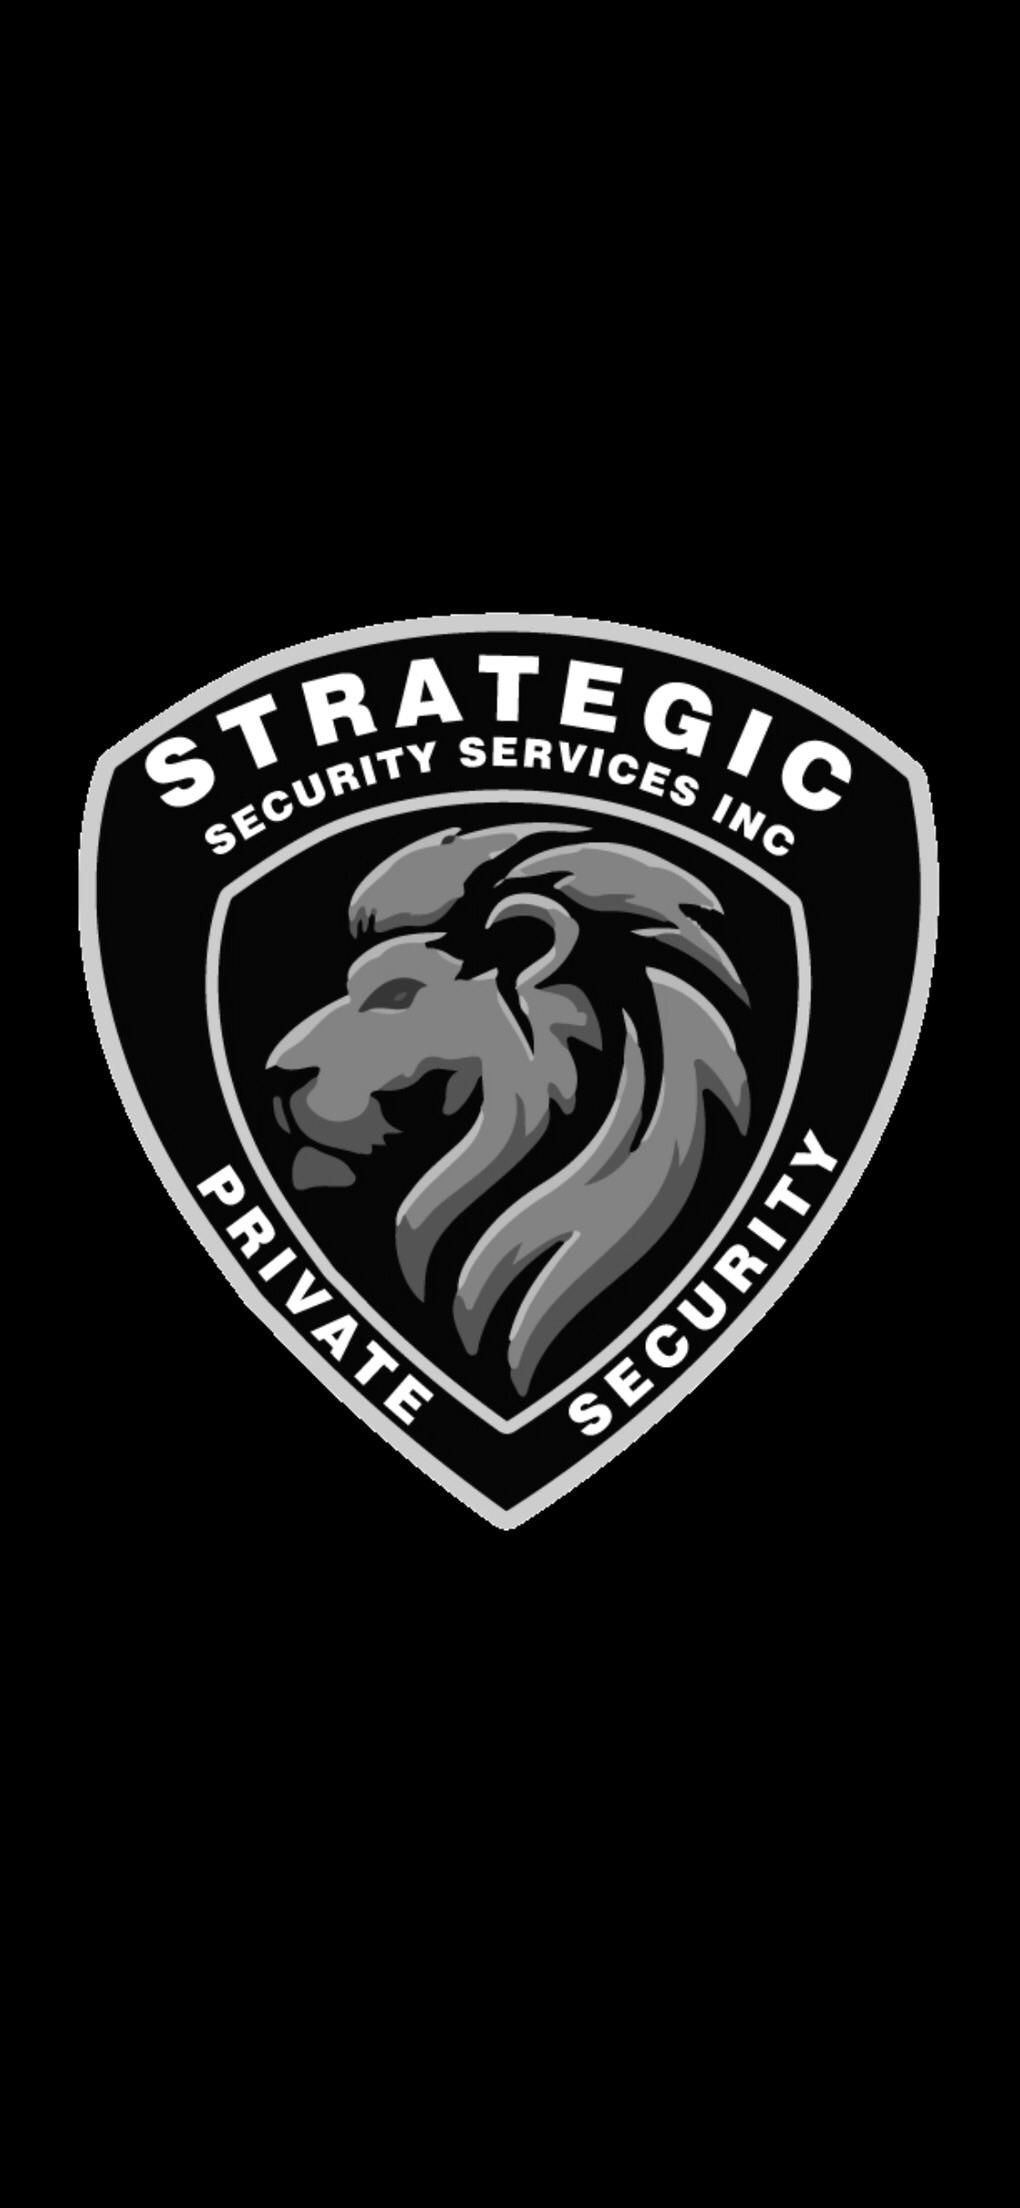 Strategic Security Services Inc.